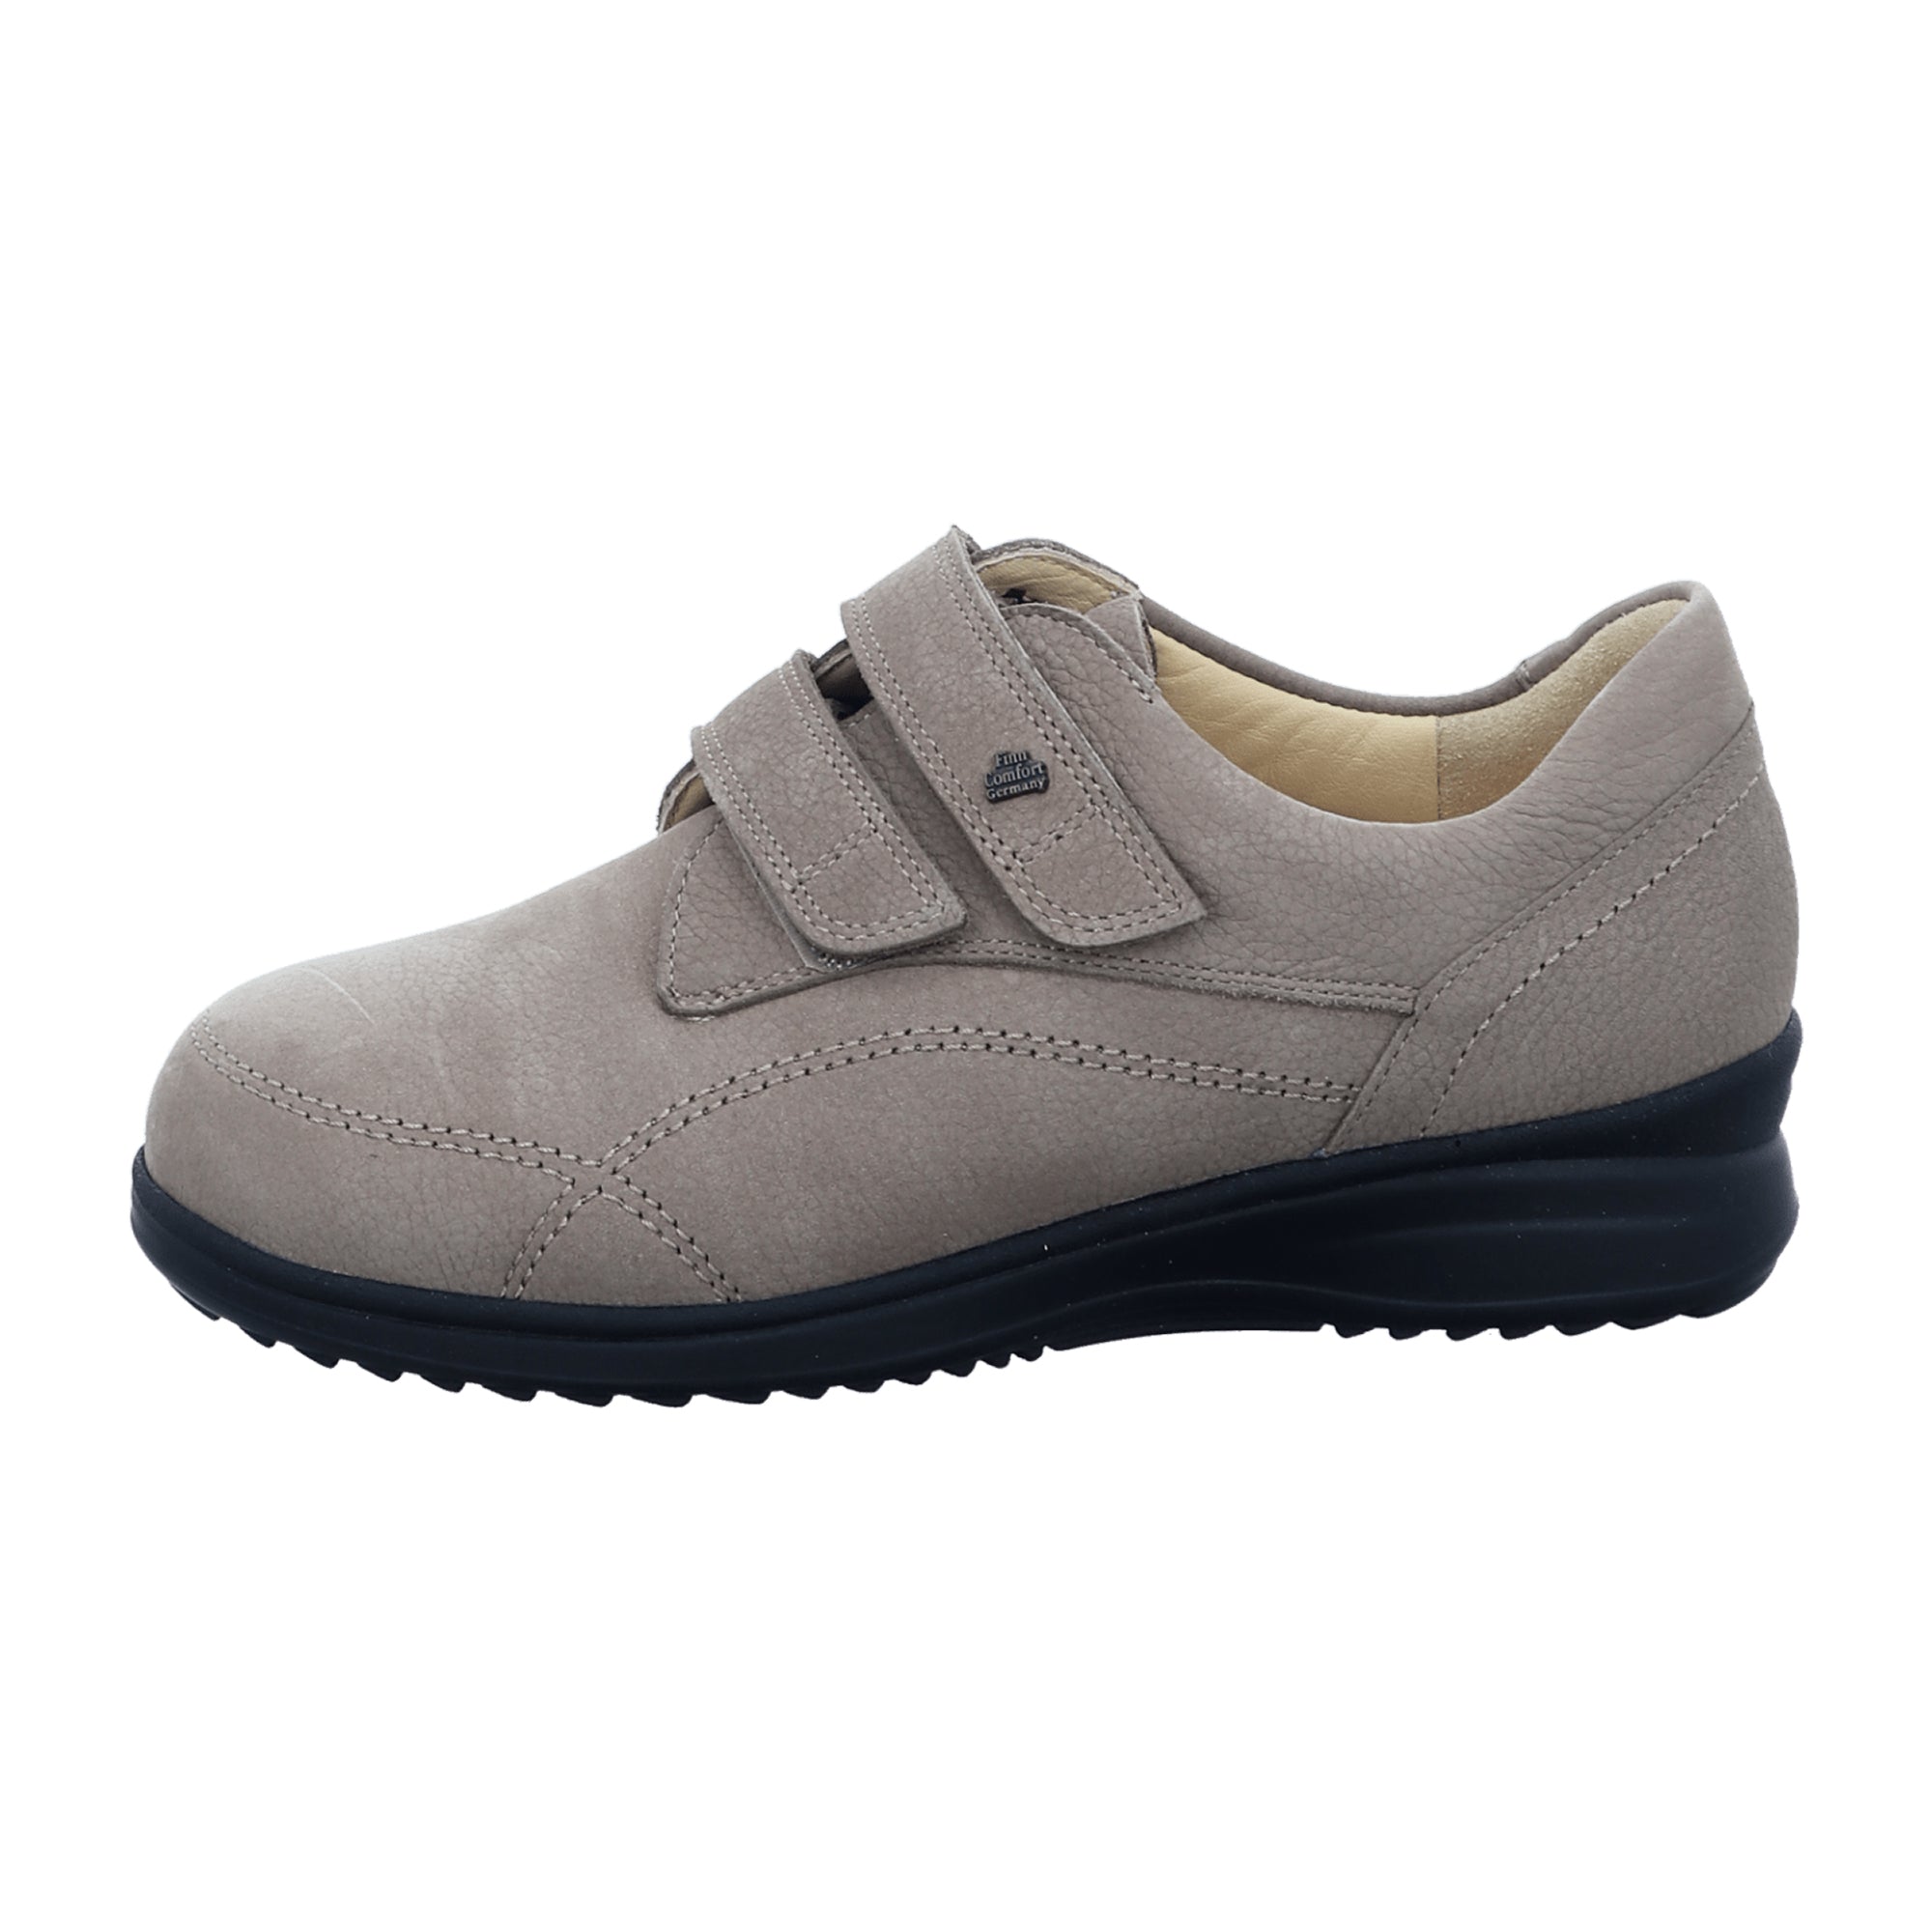 Finn Comfort 96522 Women's Comfort Shoes - Stylish Beige Leather, Orthopedic Support